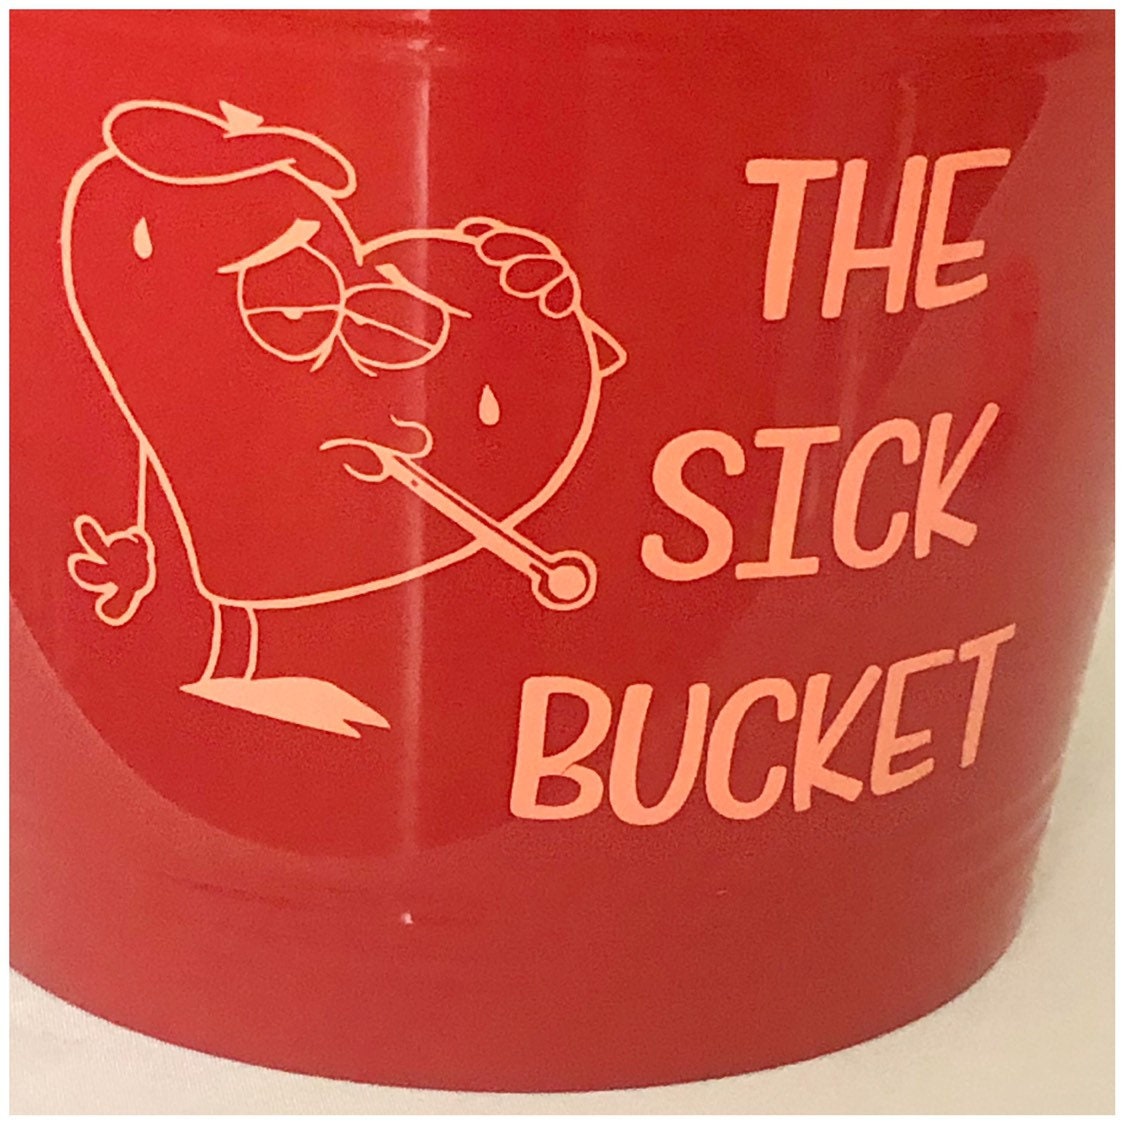 Features – The Puke Bucket